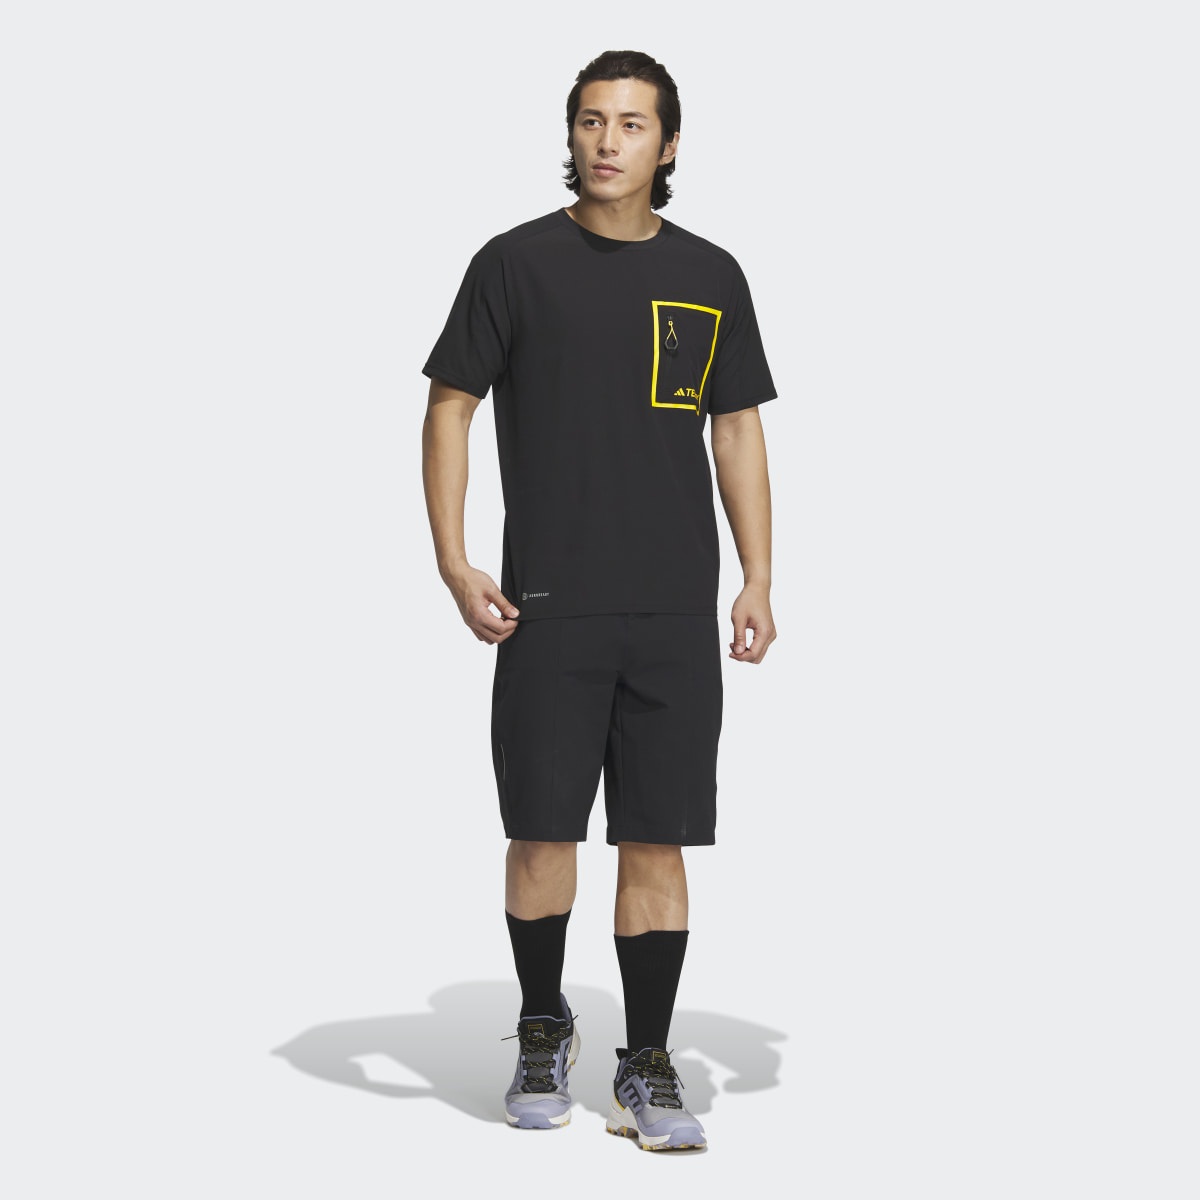 Adidas T-shirt National Geographic Short Sleeve. 6